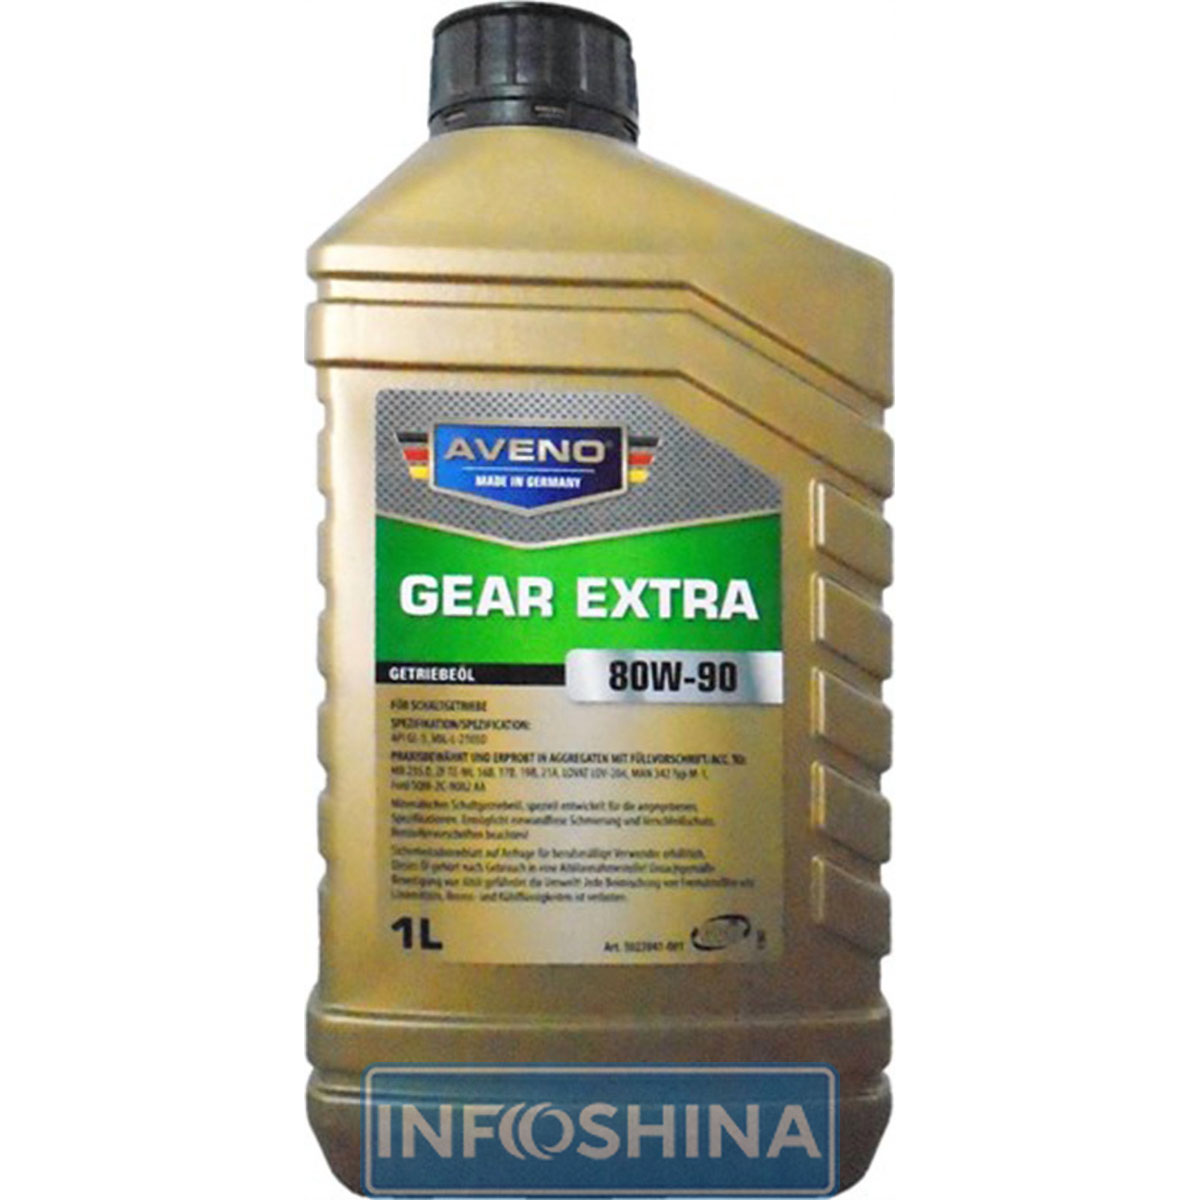 Купить масло AVENO Gear Extra 80W-90 GL-5 (1л)